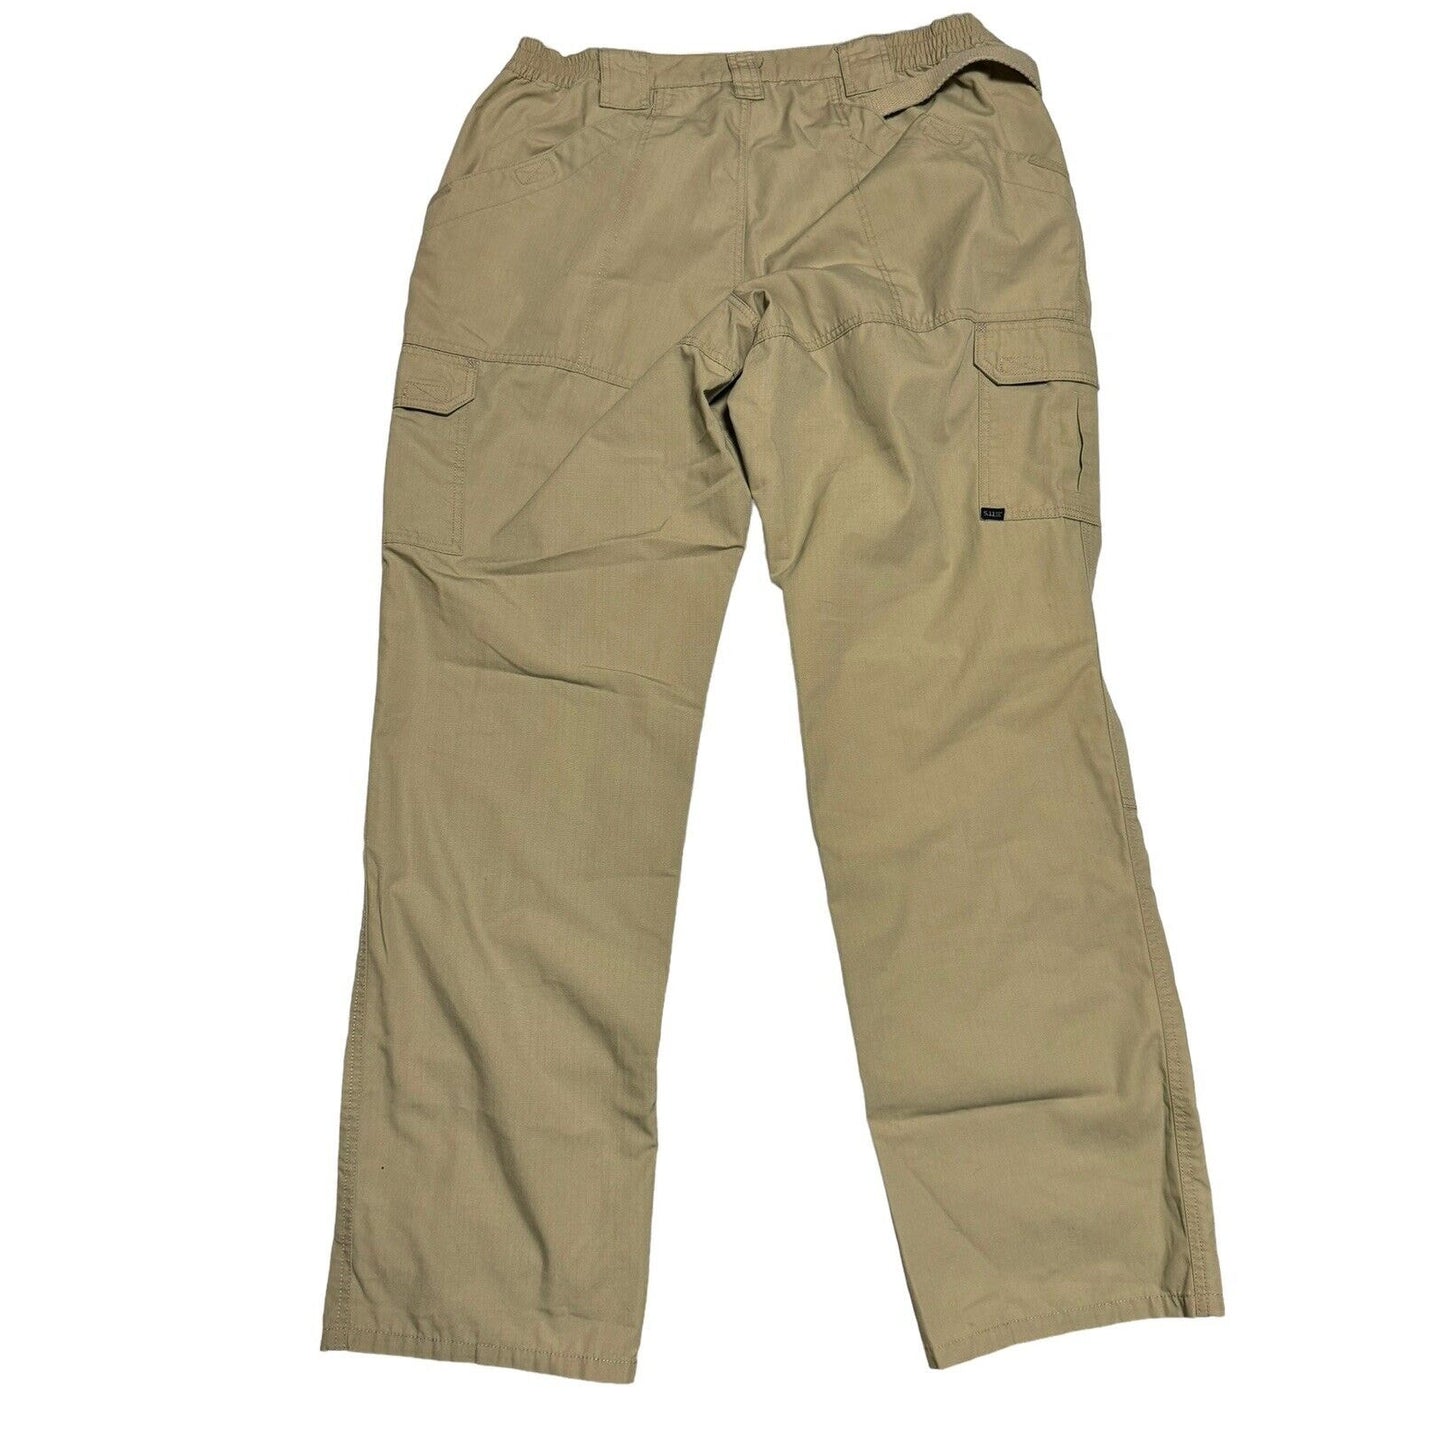 5.11 Tactical Pants Womens 18 Long Khaki Beige Taclite Pro Pant Ripstop Cargo